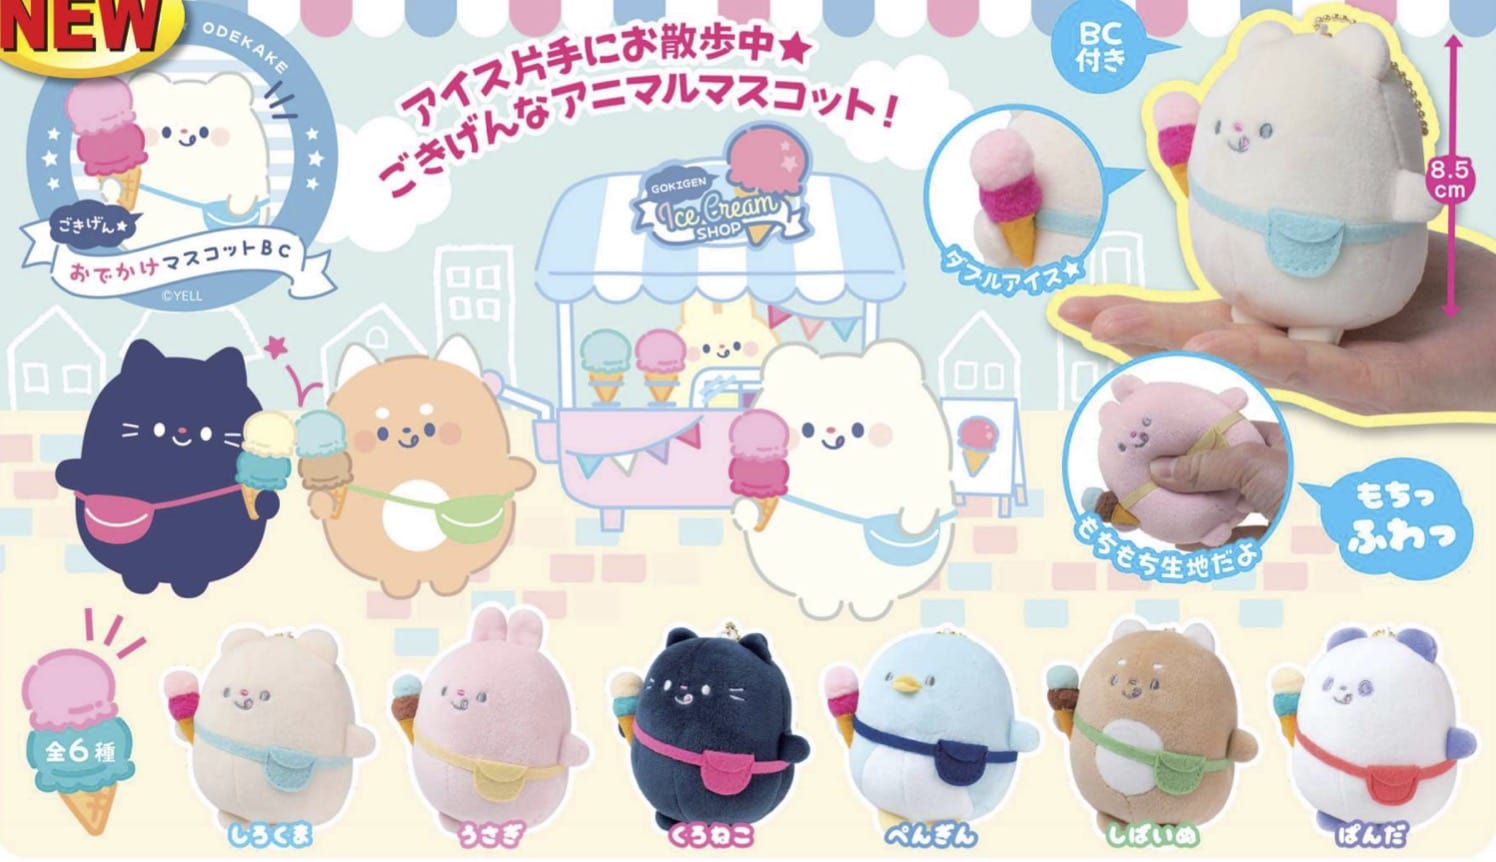 Hakubundo Good Luck Ice Cream Truck Takeout Bear Mascot Plush with Keychain Kawaii Gifts